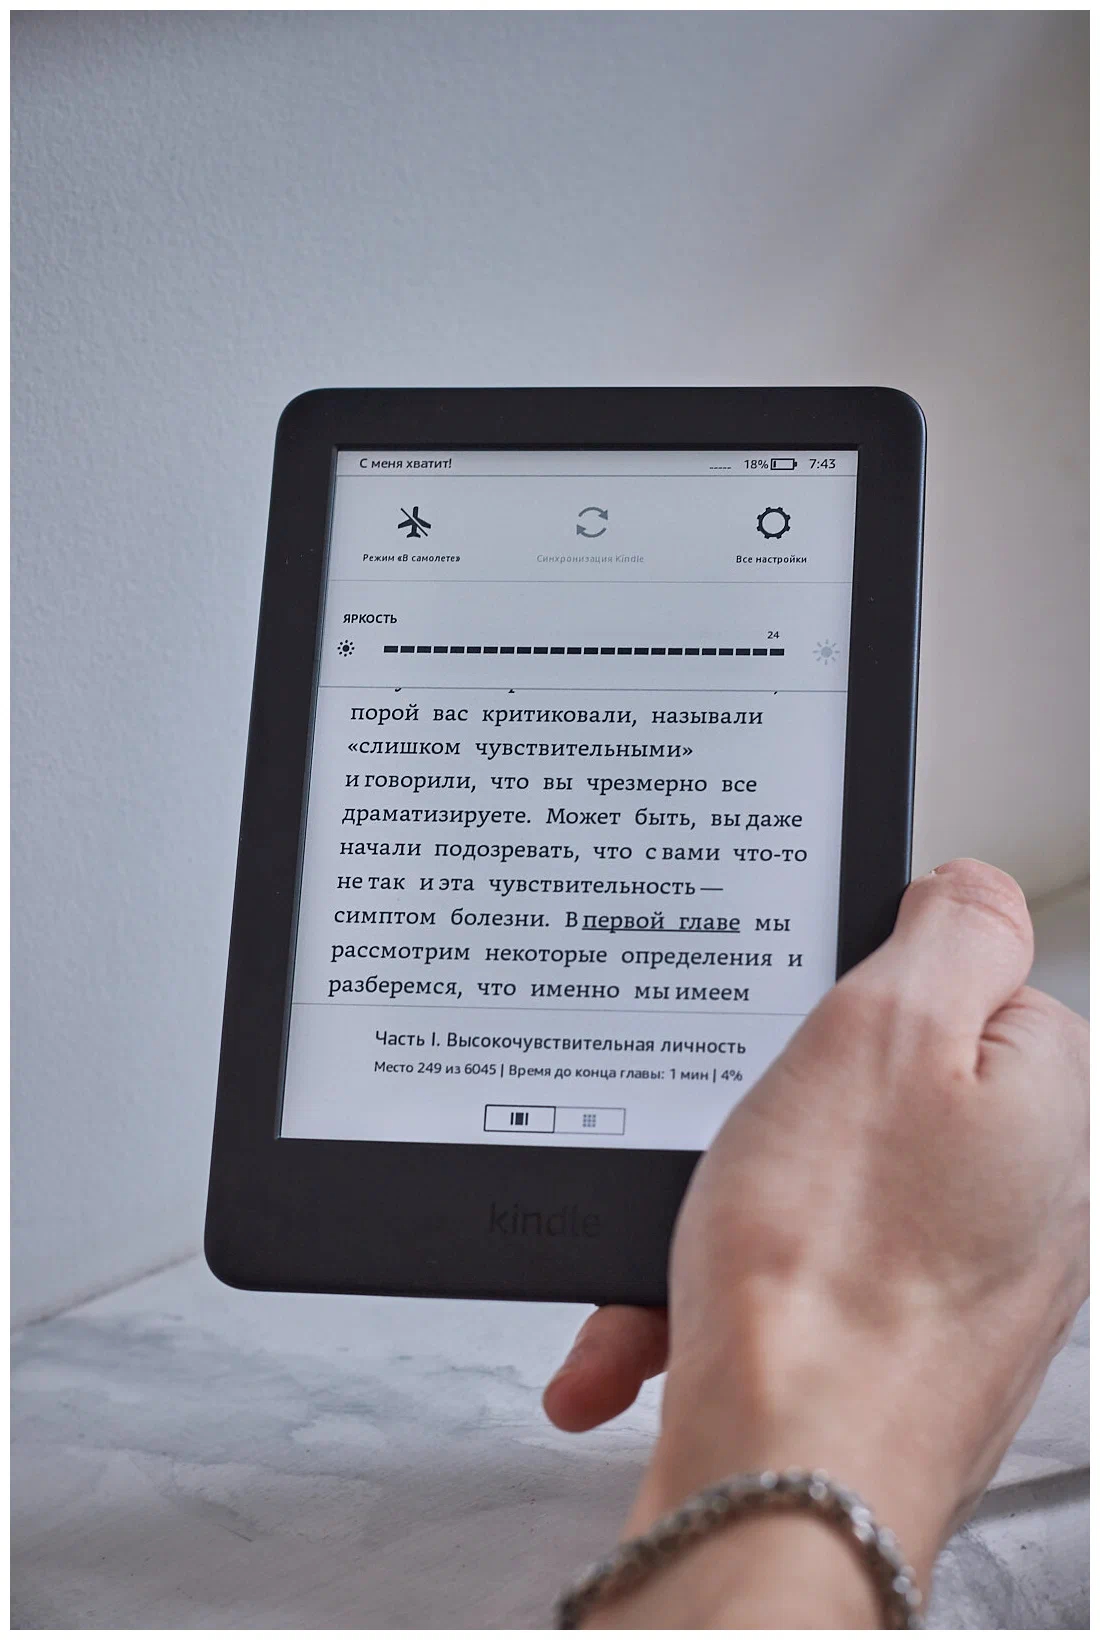 Электронная книга Amazon Kindle 10 2020 8Gb Black + Чехол UltraSlim розовый